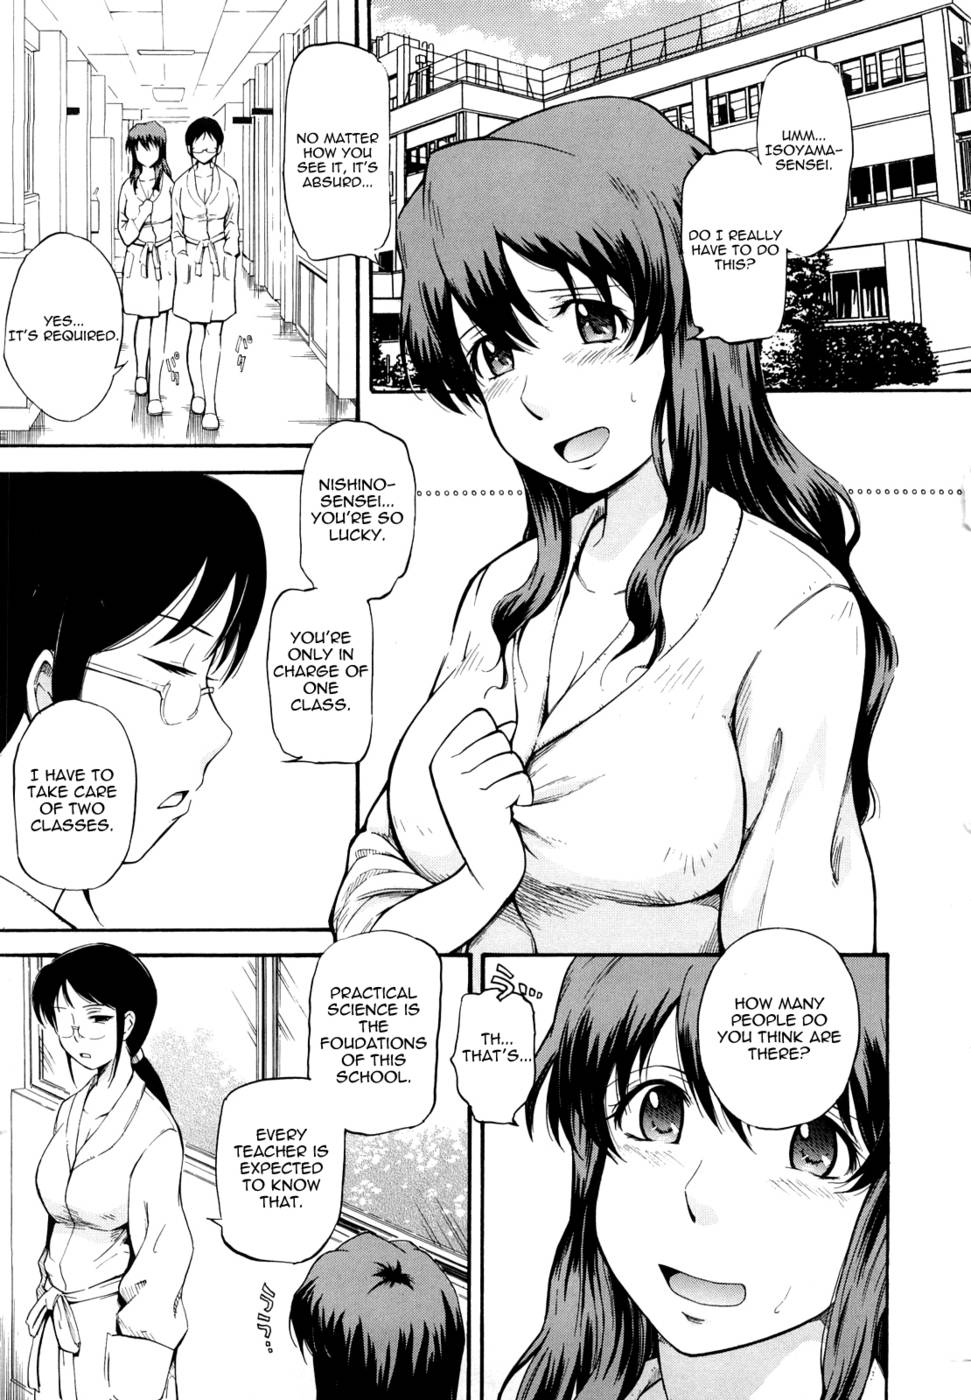 Hentai Manga Comic-The Right Way to Teach Sex Education-Read-1